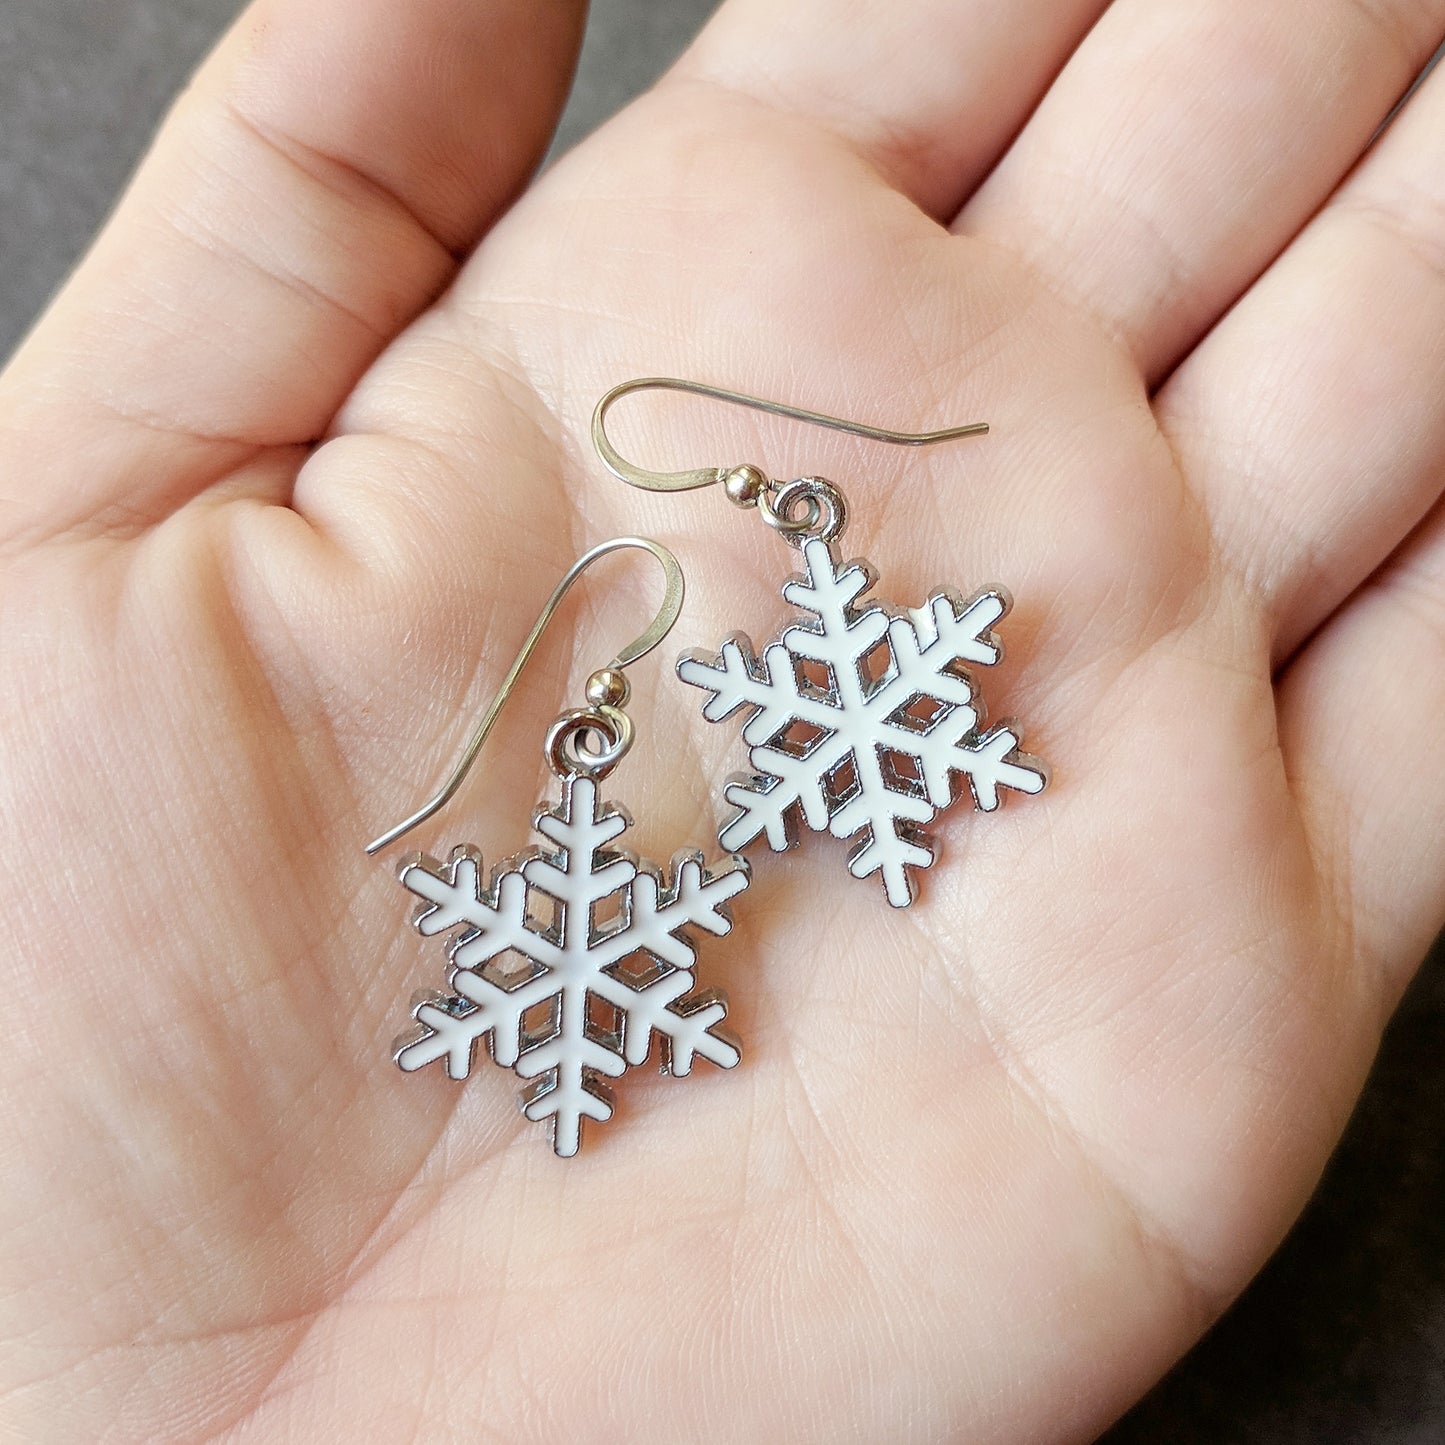 White Snowflake Dangle Earrings - Surgical Steel